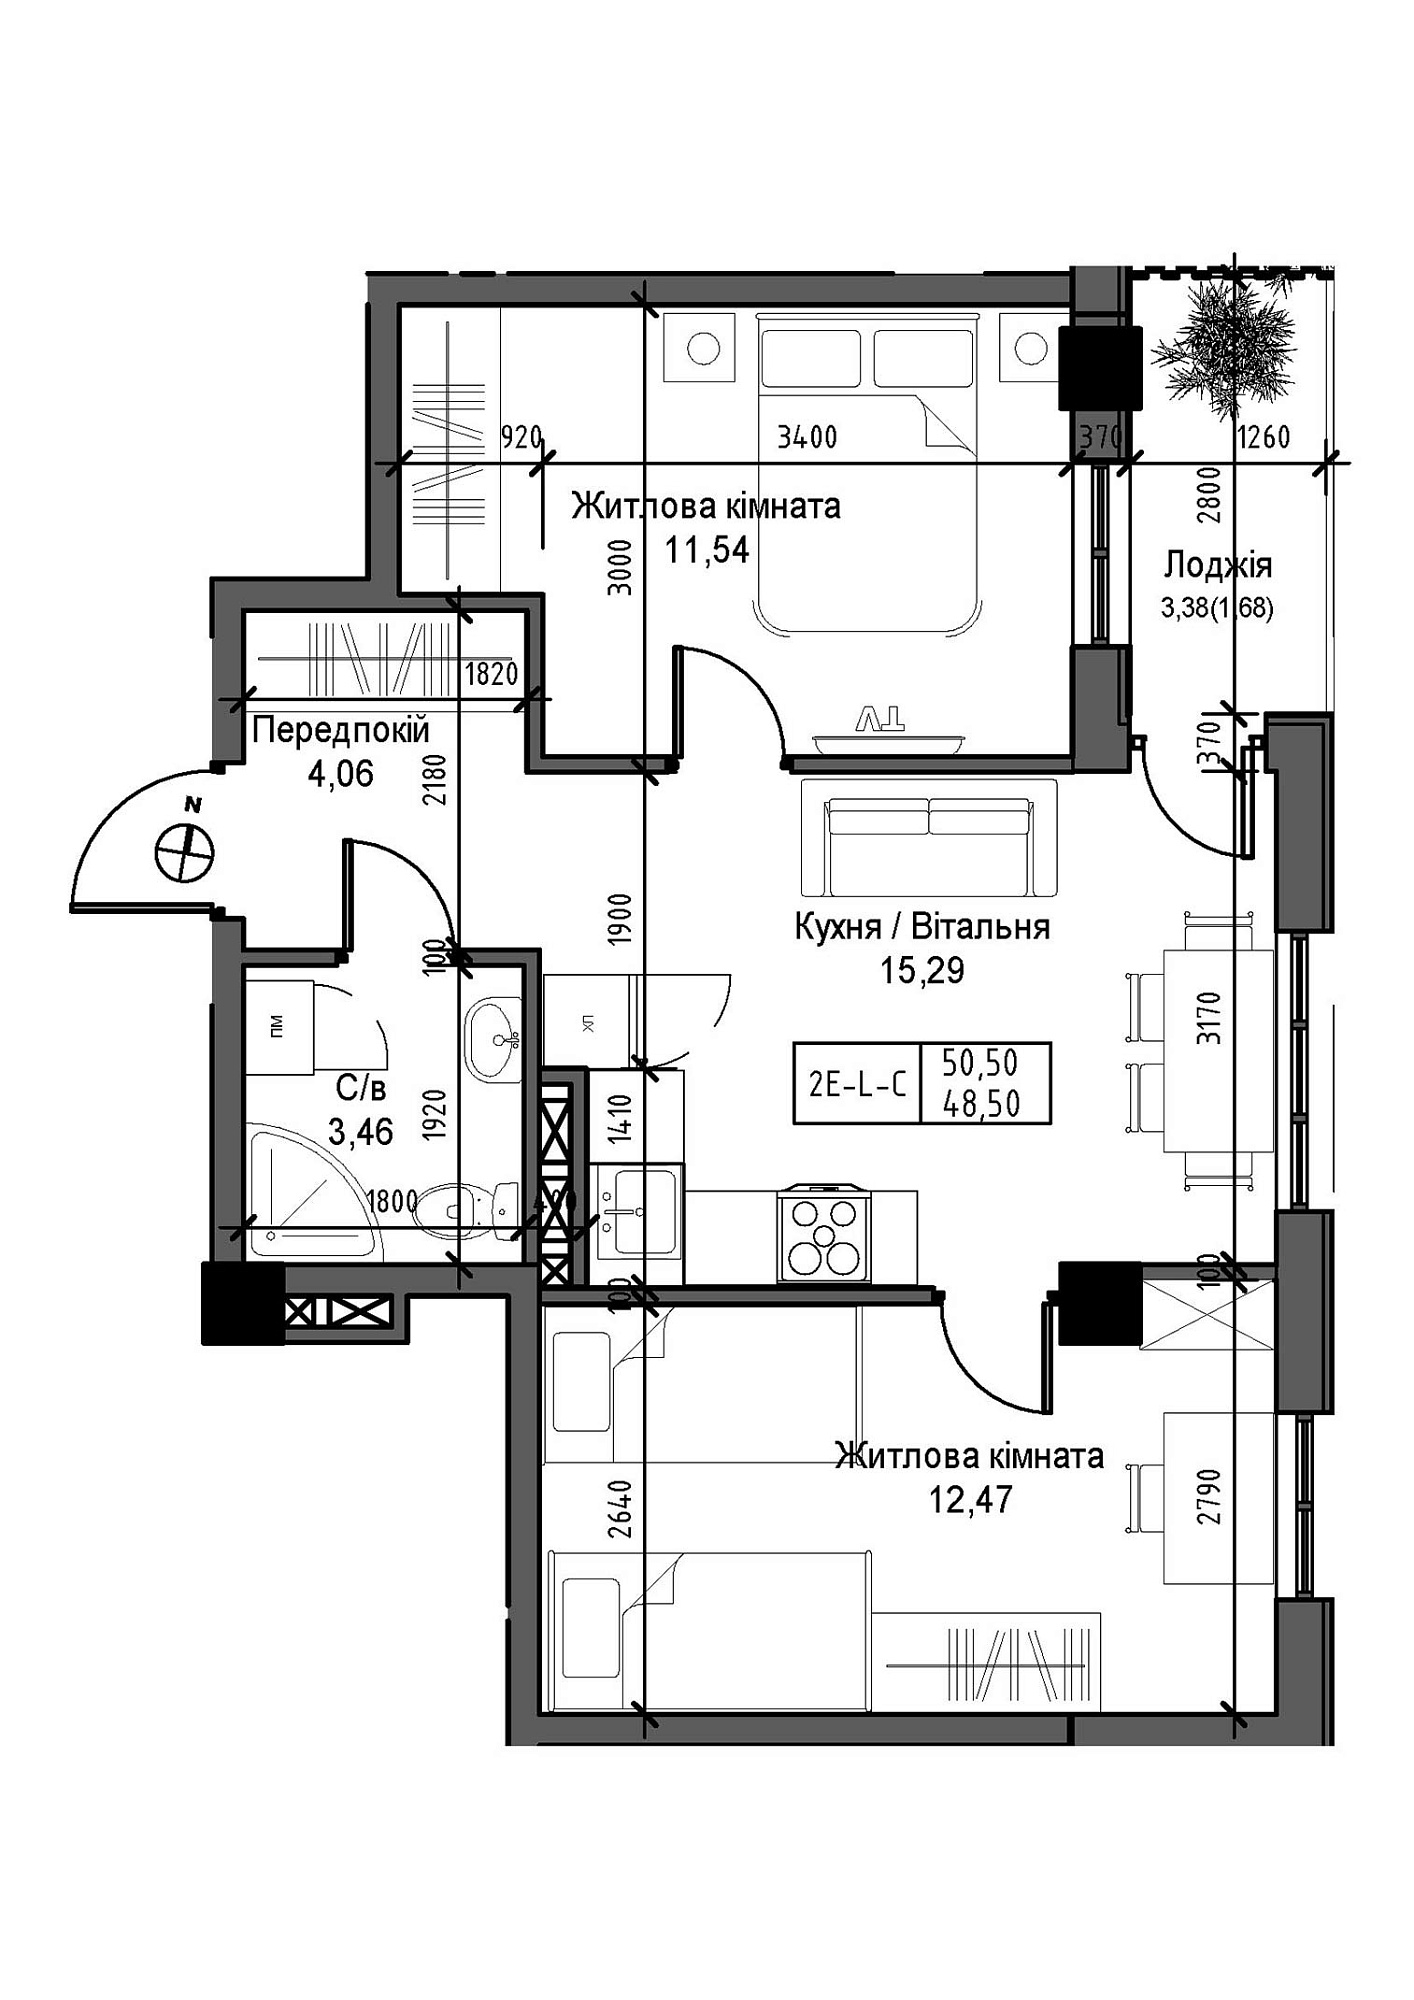 Planning 2-rm flats area 48.5m2, UM-007-03/0007.